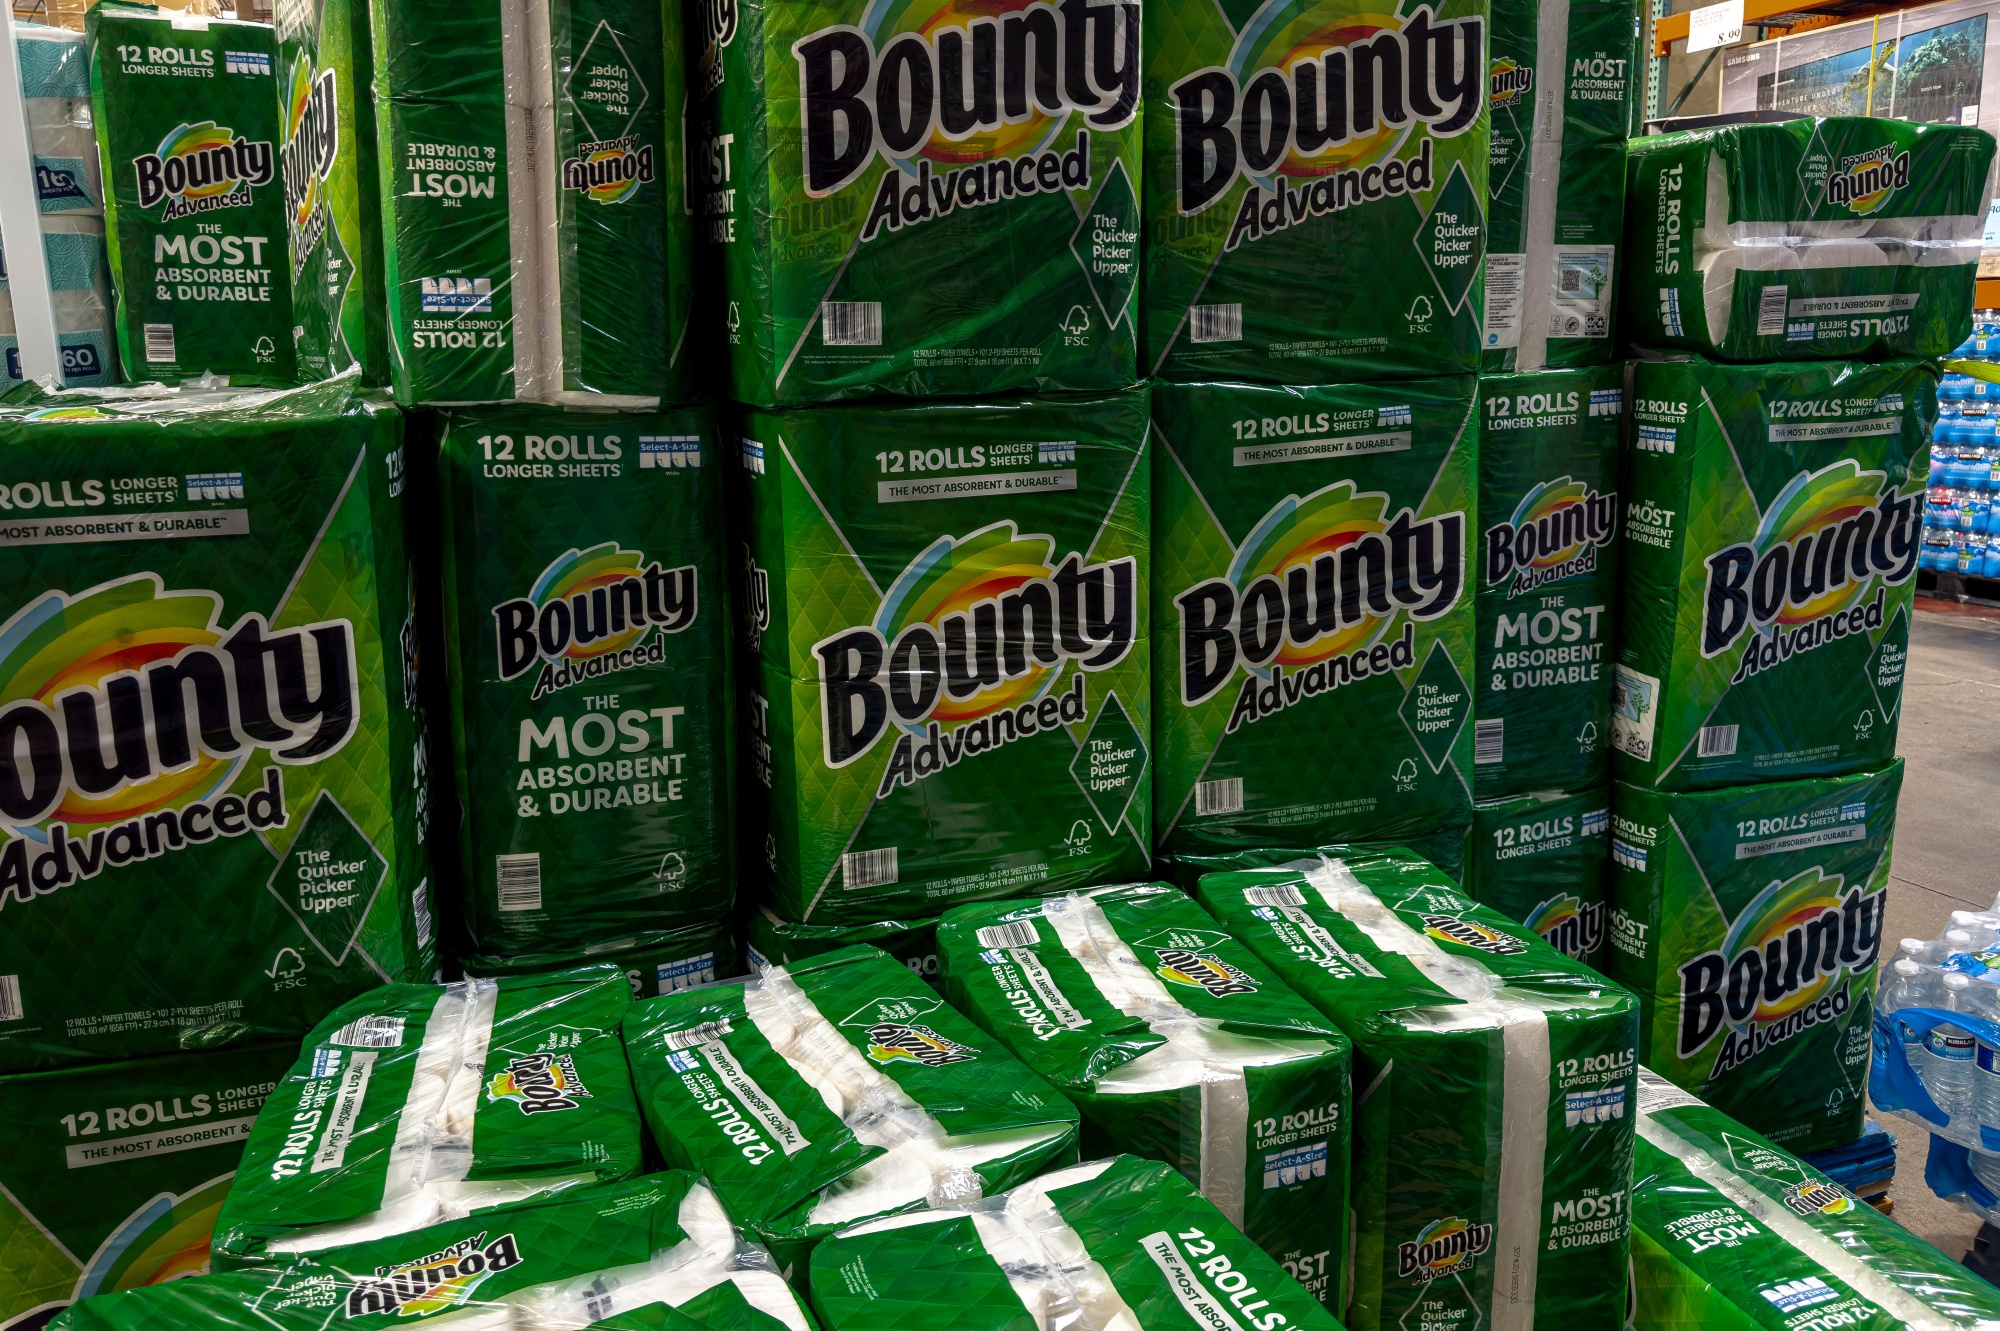 Proctor & Gamble Bounty brand paper towels.